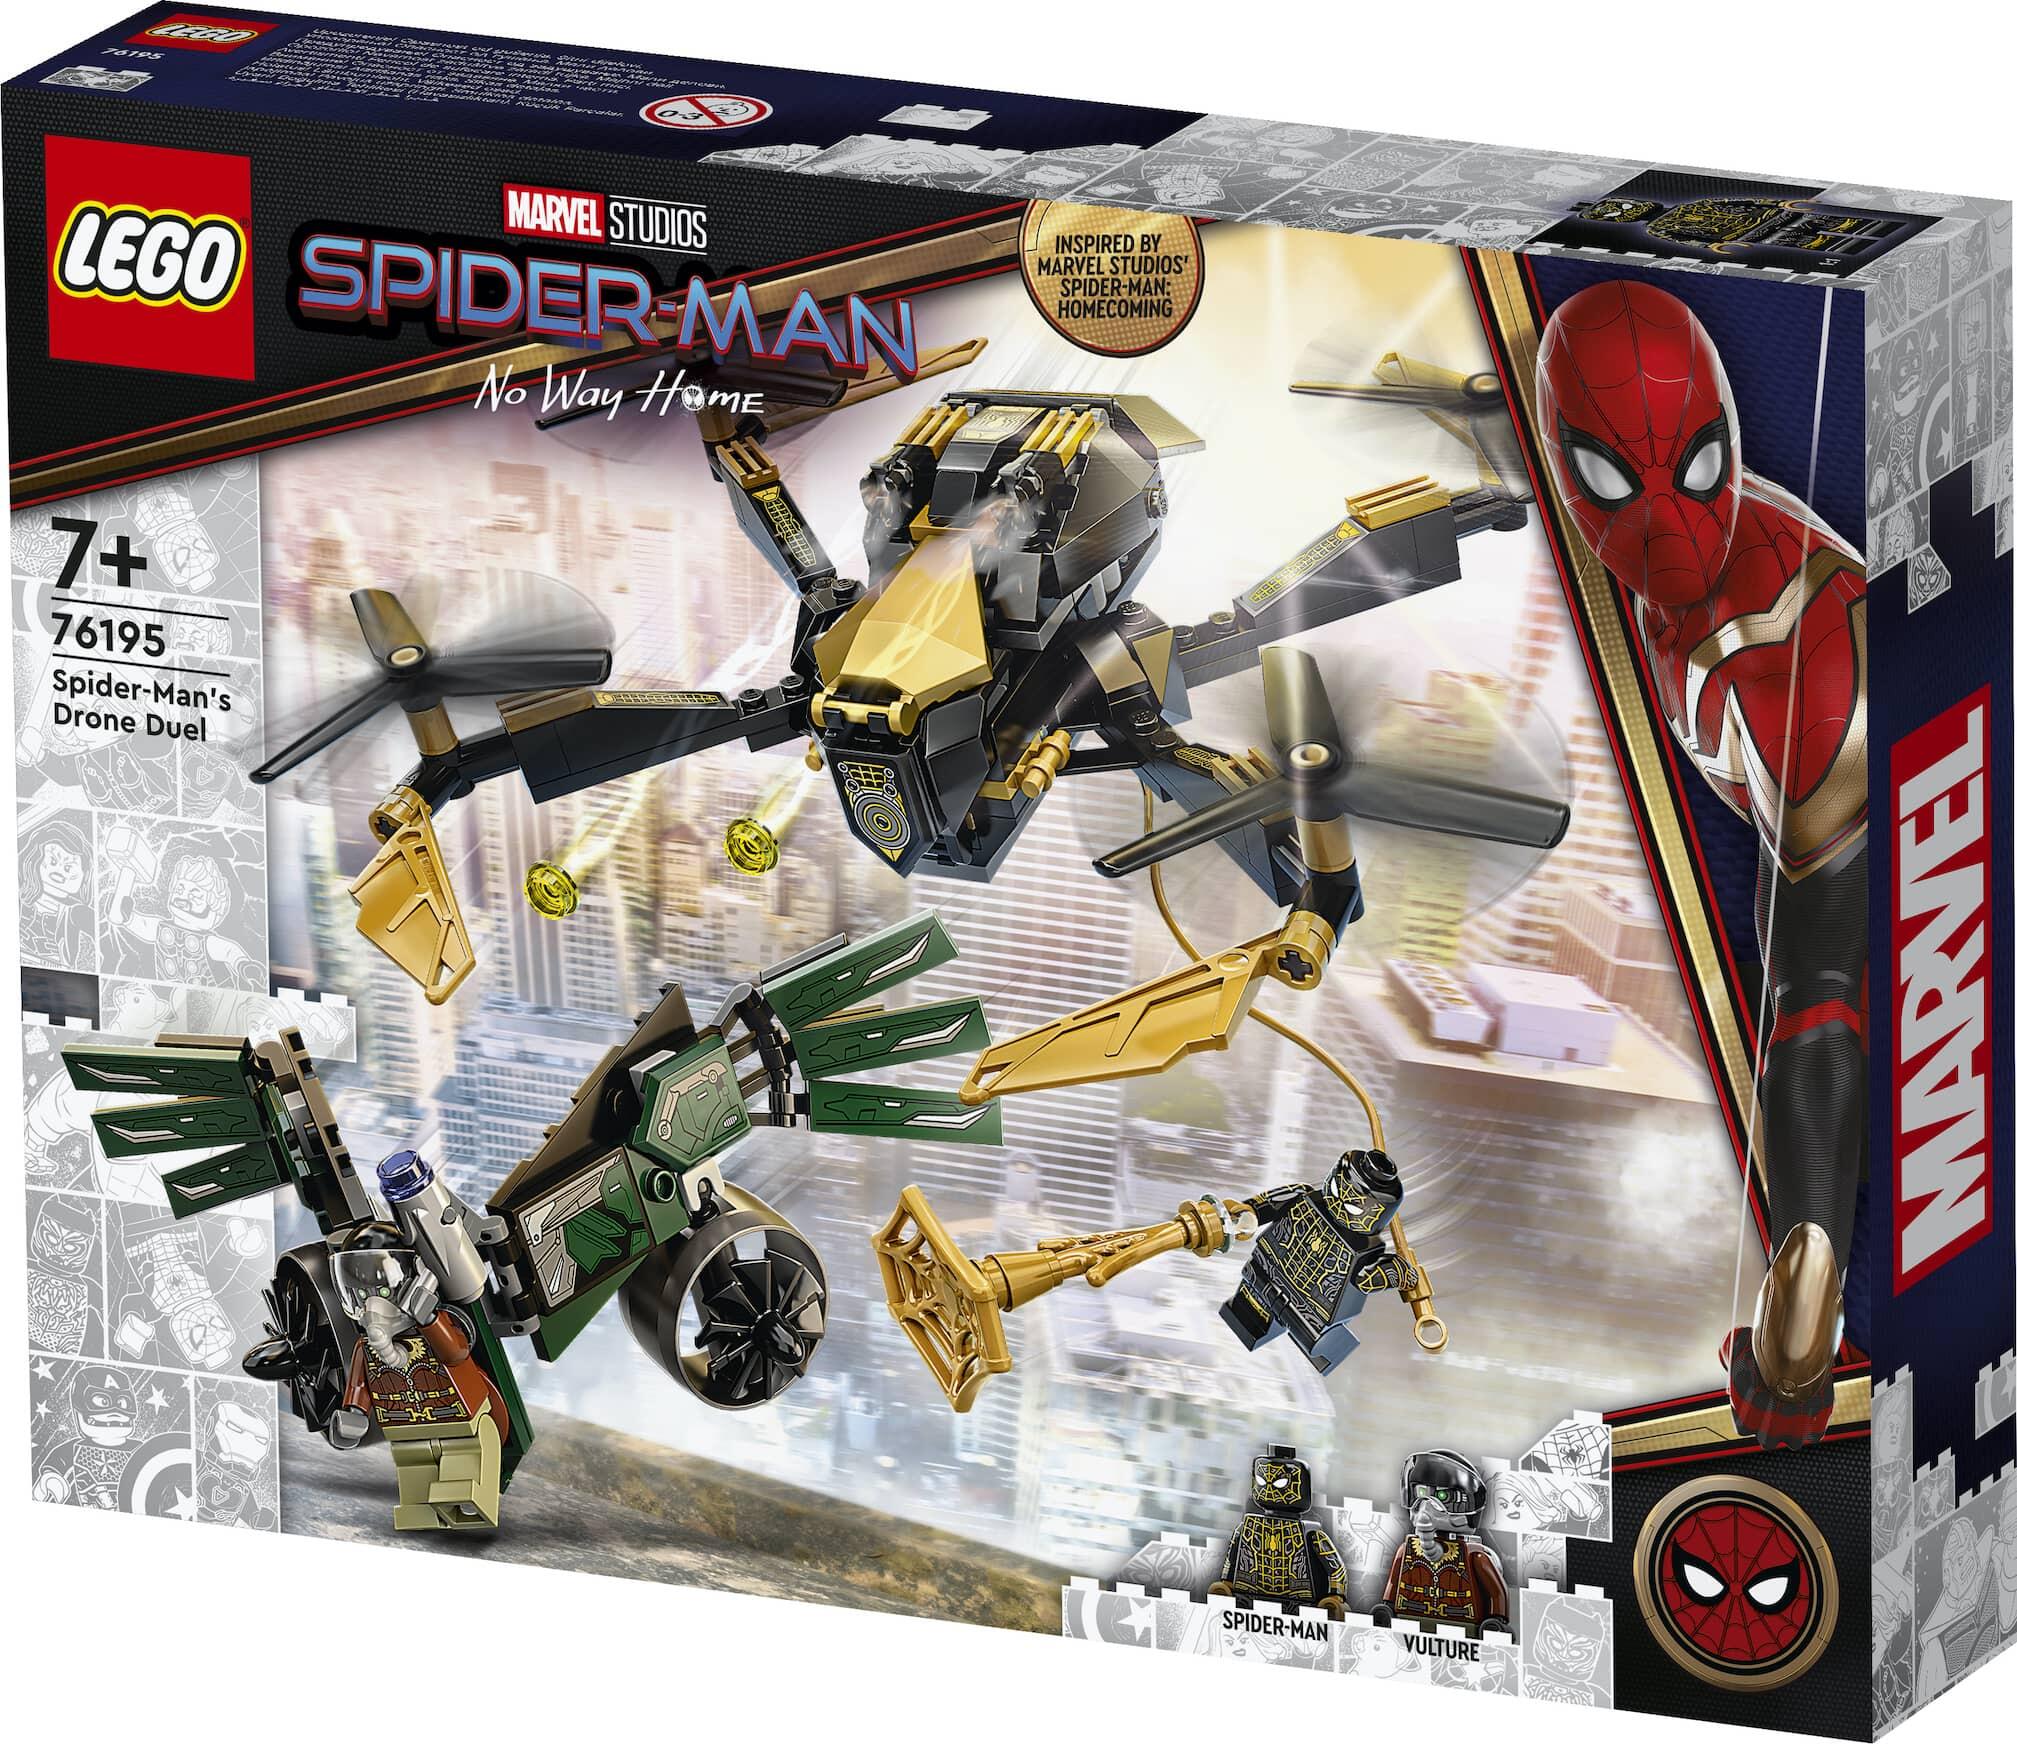 Spider-Man’s Drone Duel LEGO Set